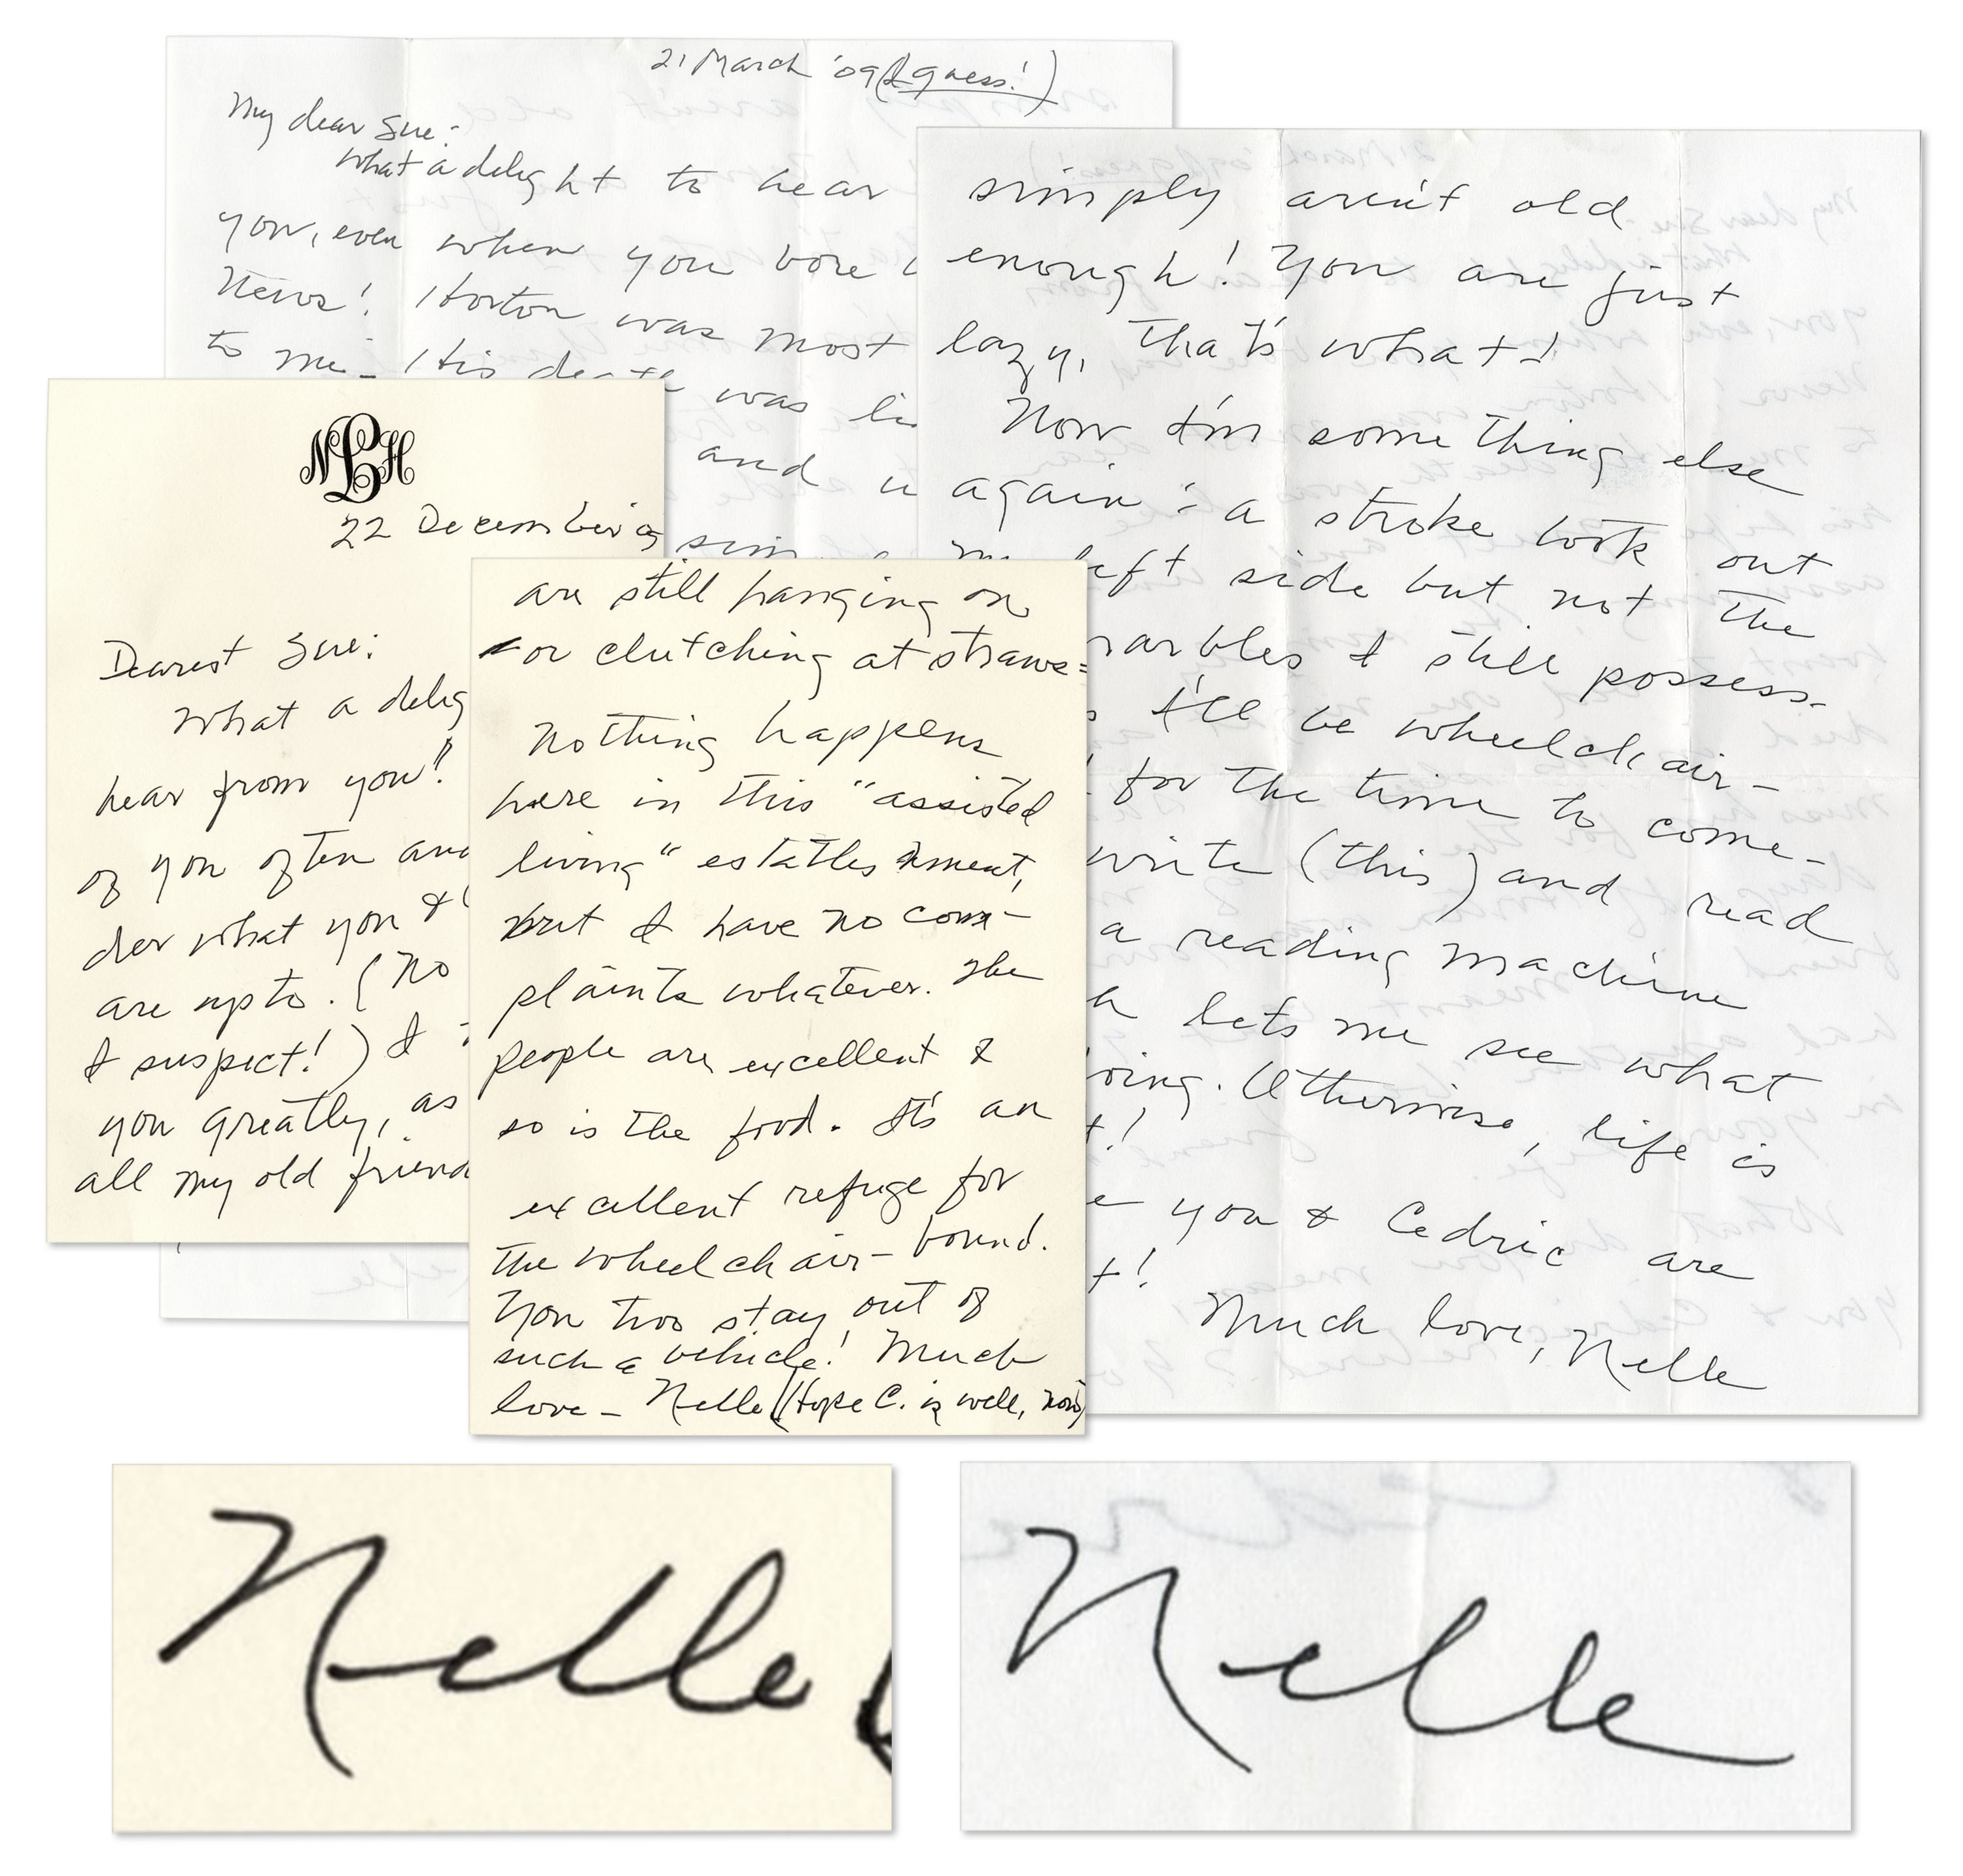 Jem Letter To Atticus (To Kill A Mockingbird)